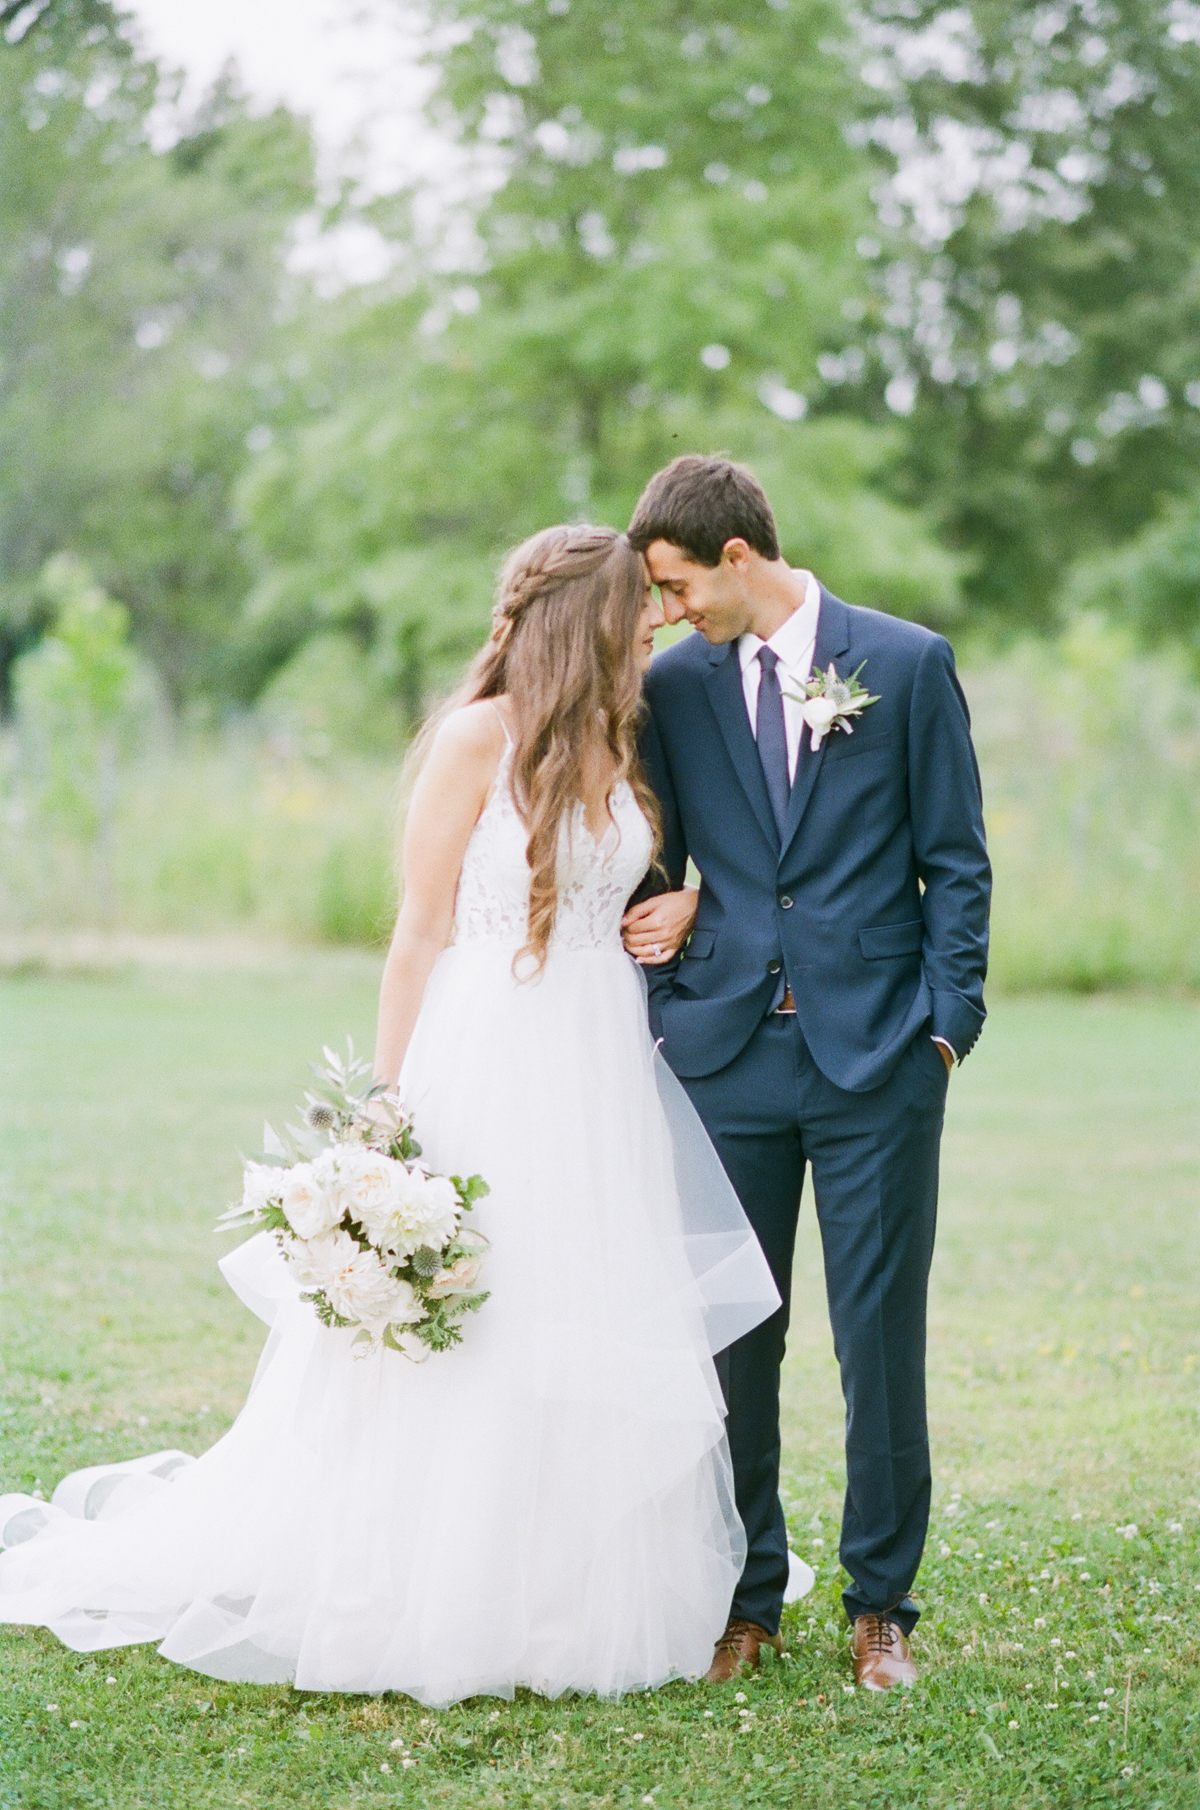 acacia ballroom wedding, cleveland wedding, blush garden wedding, bride and groom, wedding flowers